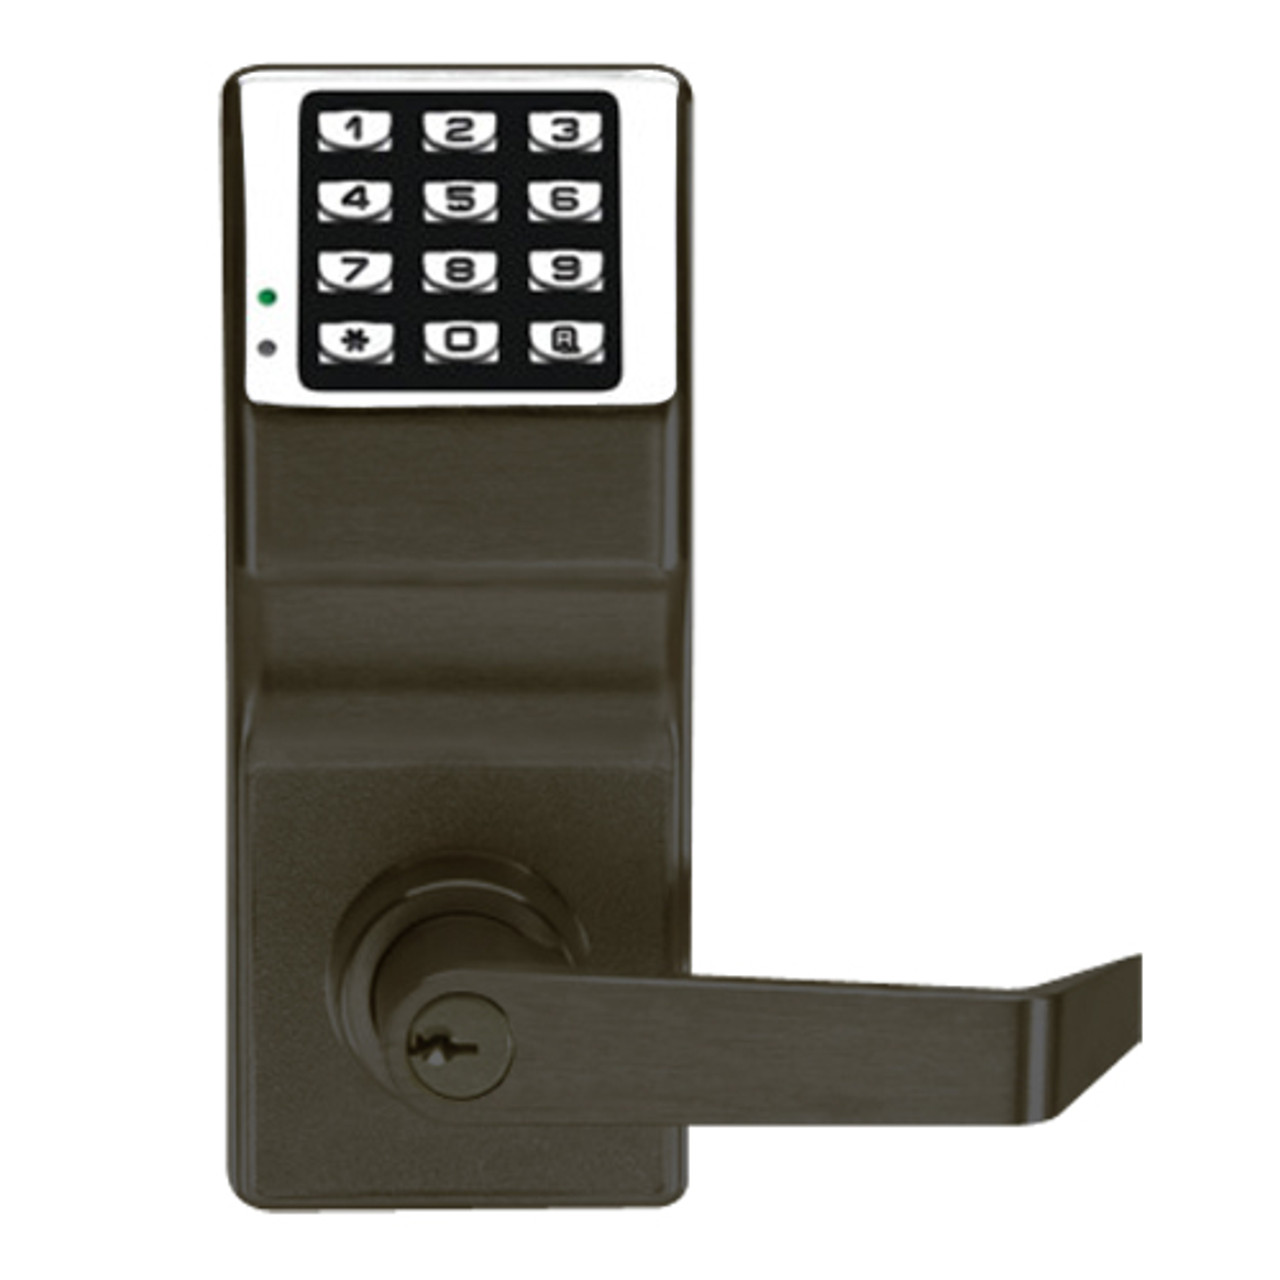 DL2700-US10B Alarm Lock Trilogy Electronic Digital Lock in Duronodic Finish